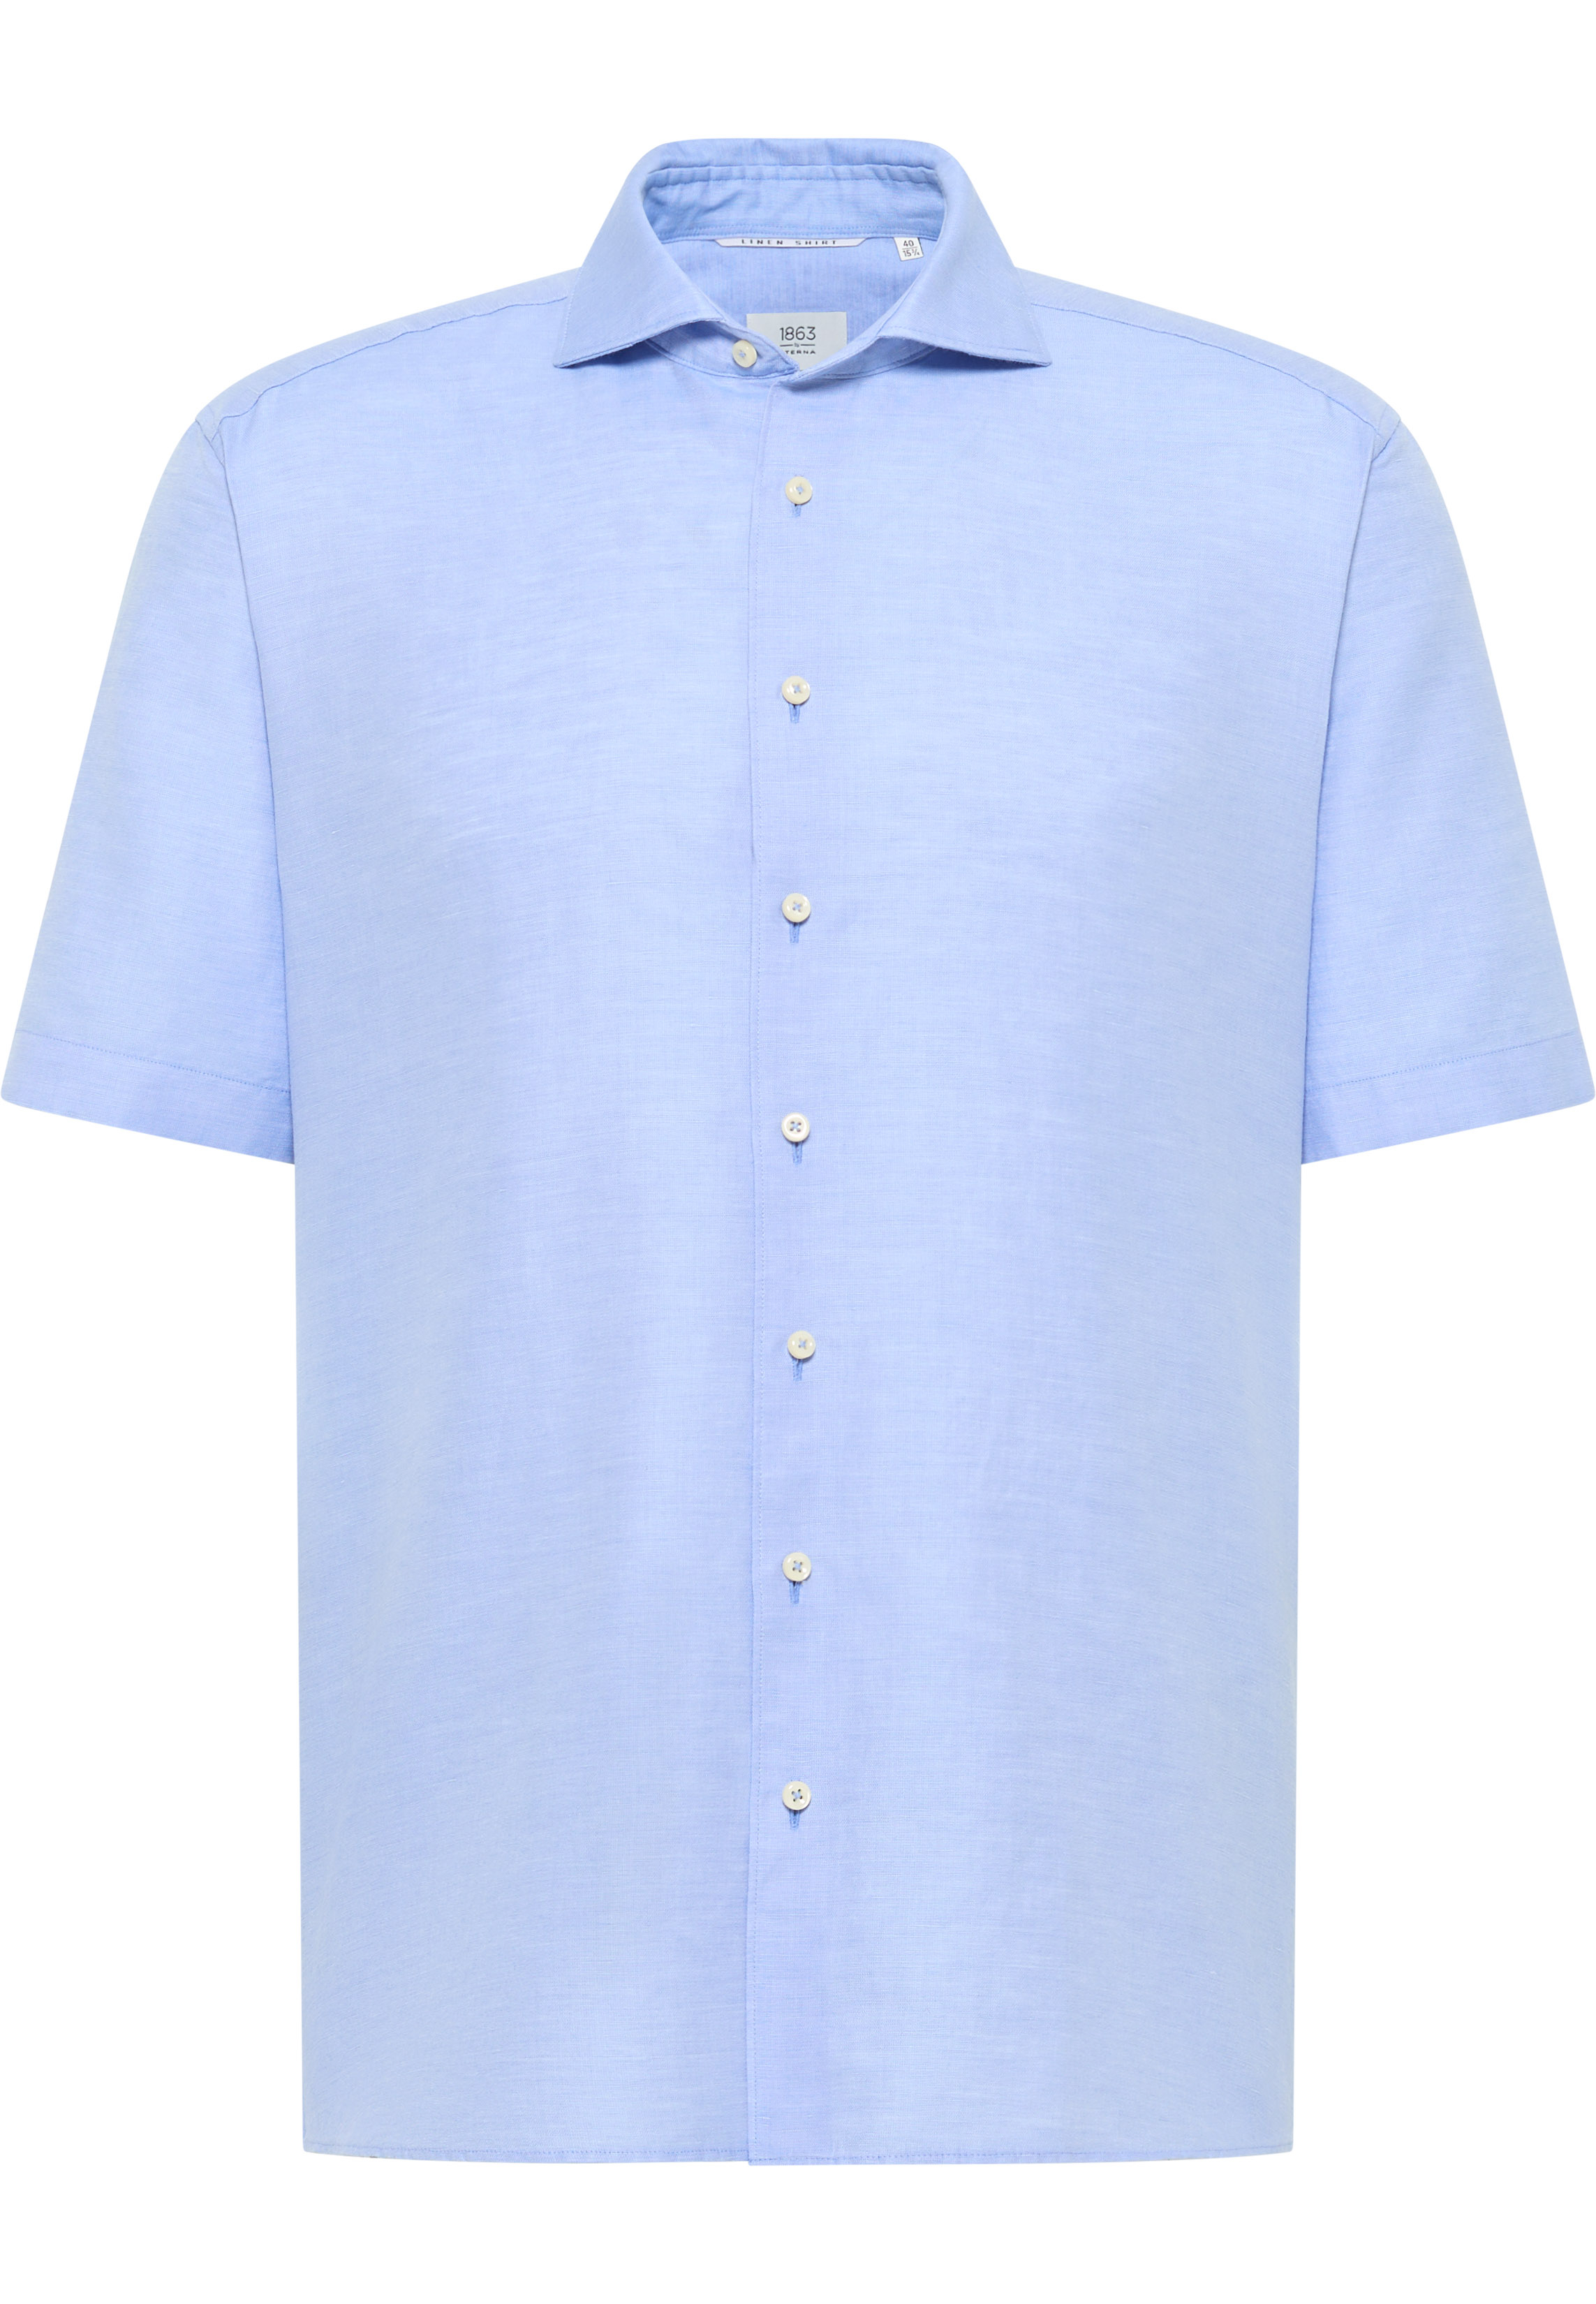 MODERN FIT Linen Shirt in azurblau unifarben